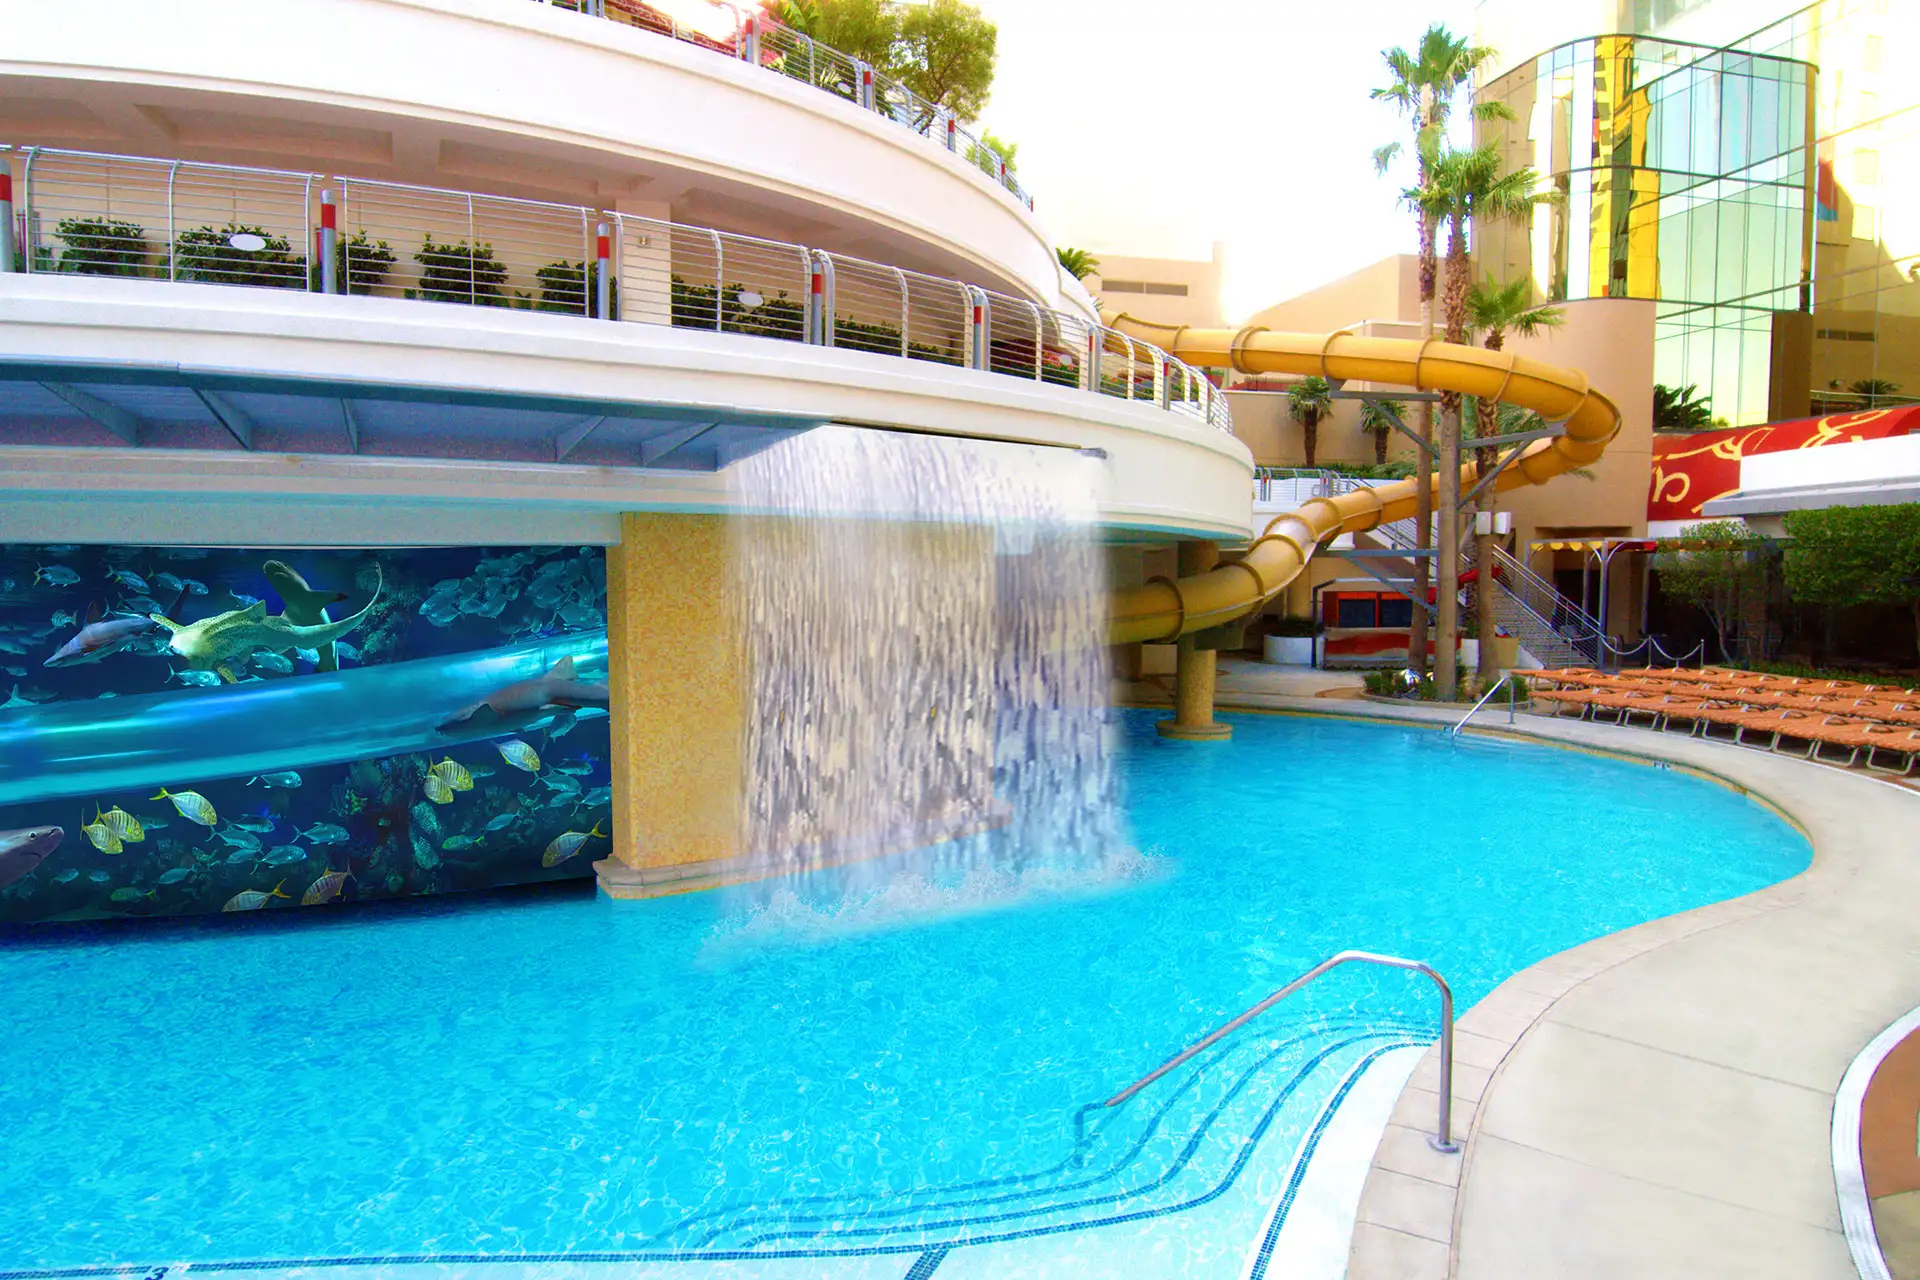 Pool at Golden Nugget Hotel in Las Vegas